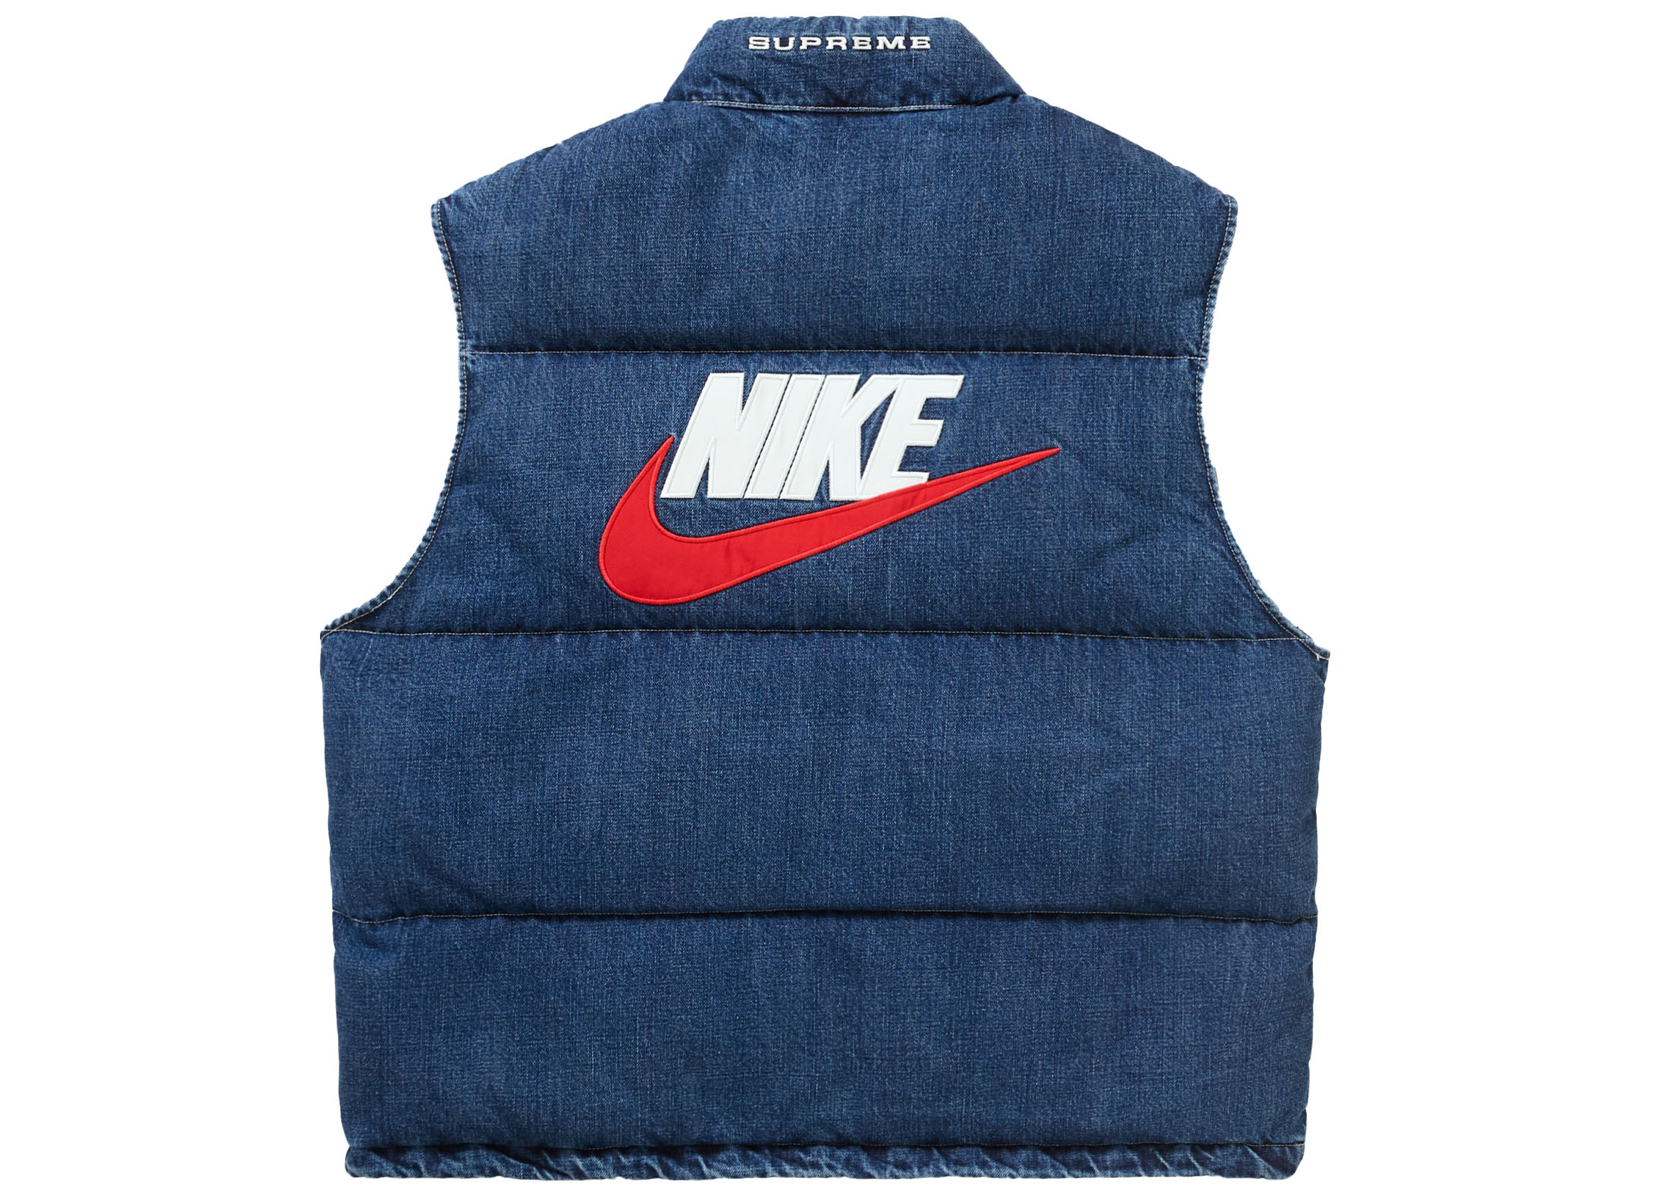 NikeDenimPuffeSUPREME Nike Denim Puffer Vest